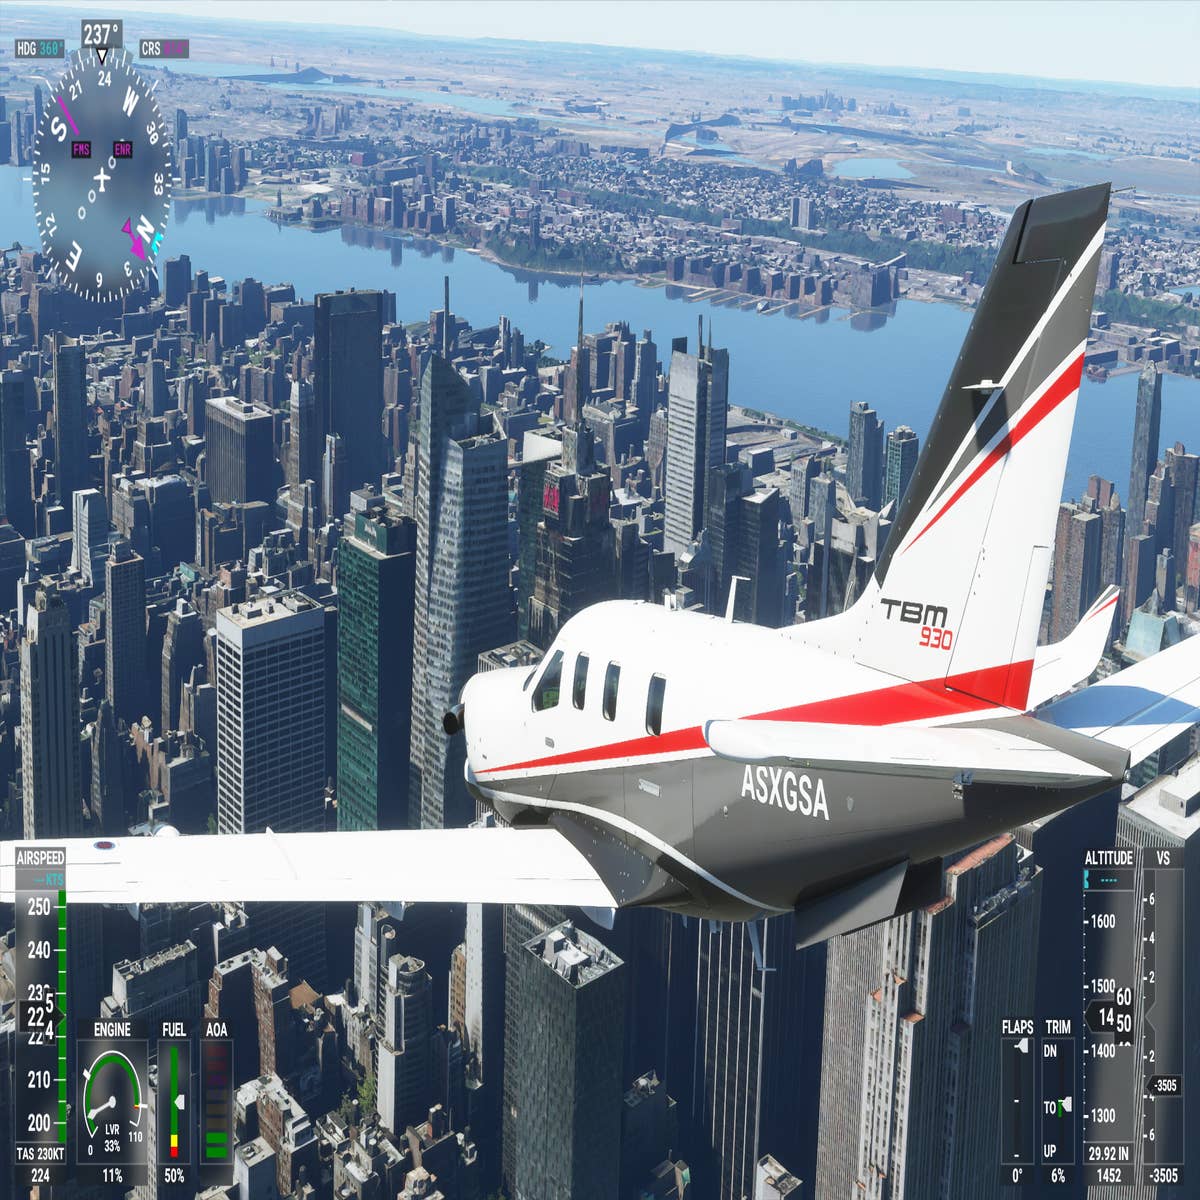 Microsoft Flight Simulator Xbox review: The true graphical